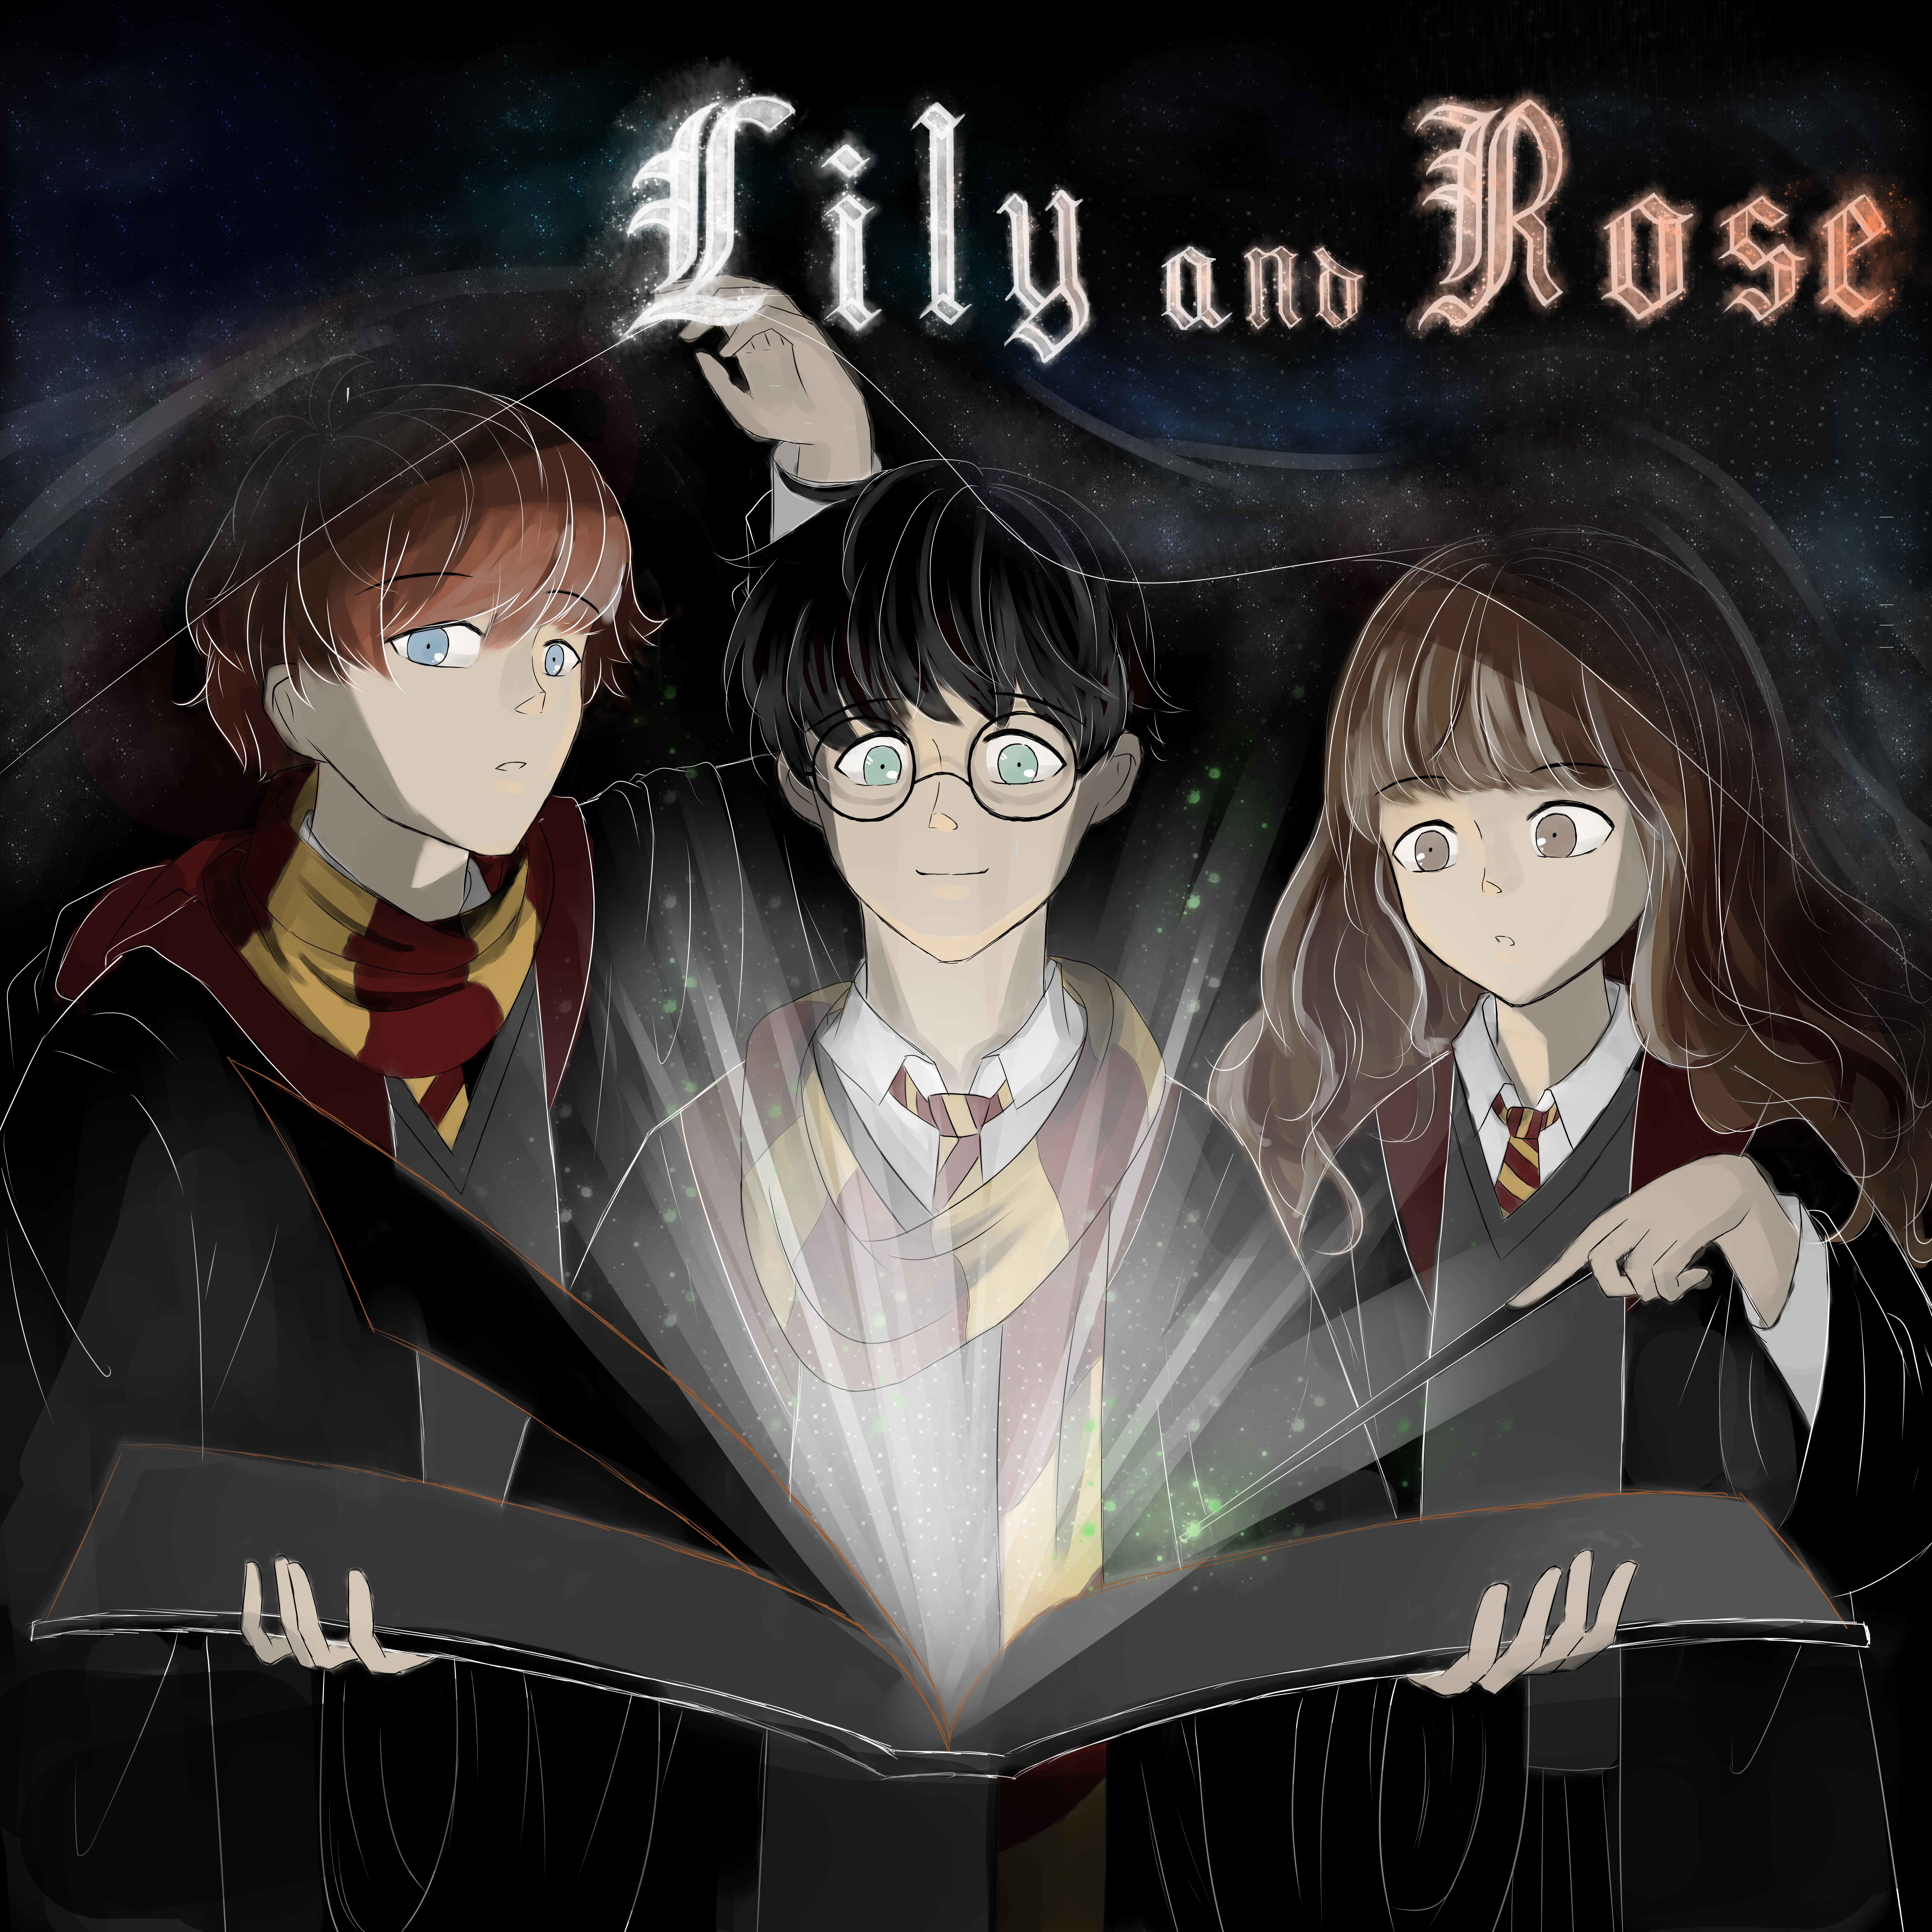 【hp】lily and rose{记哈利波特,罗恩,赫敏三人组}